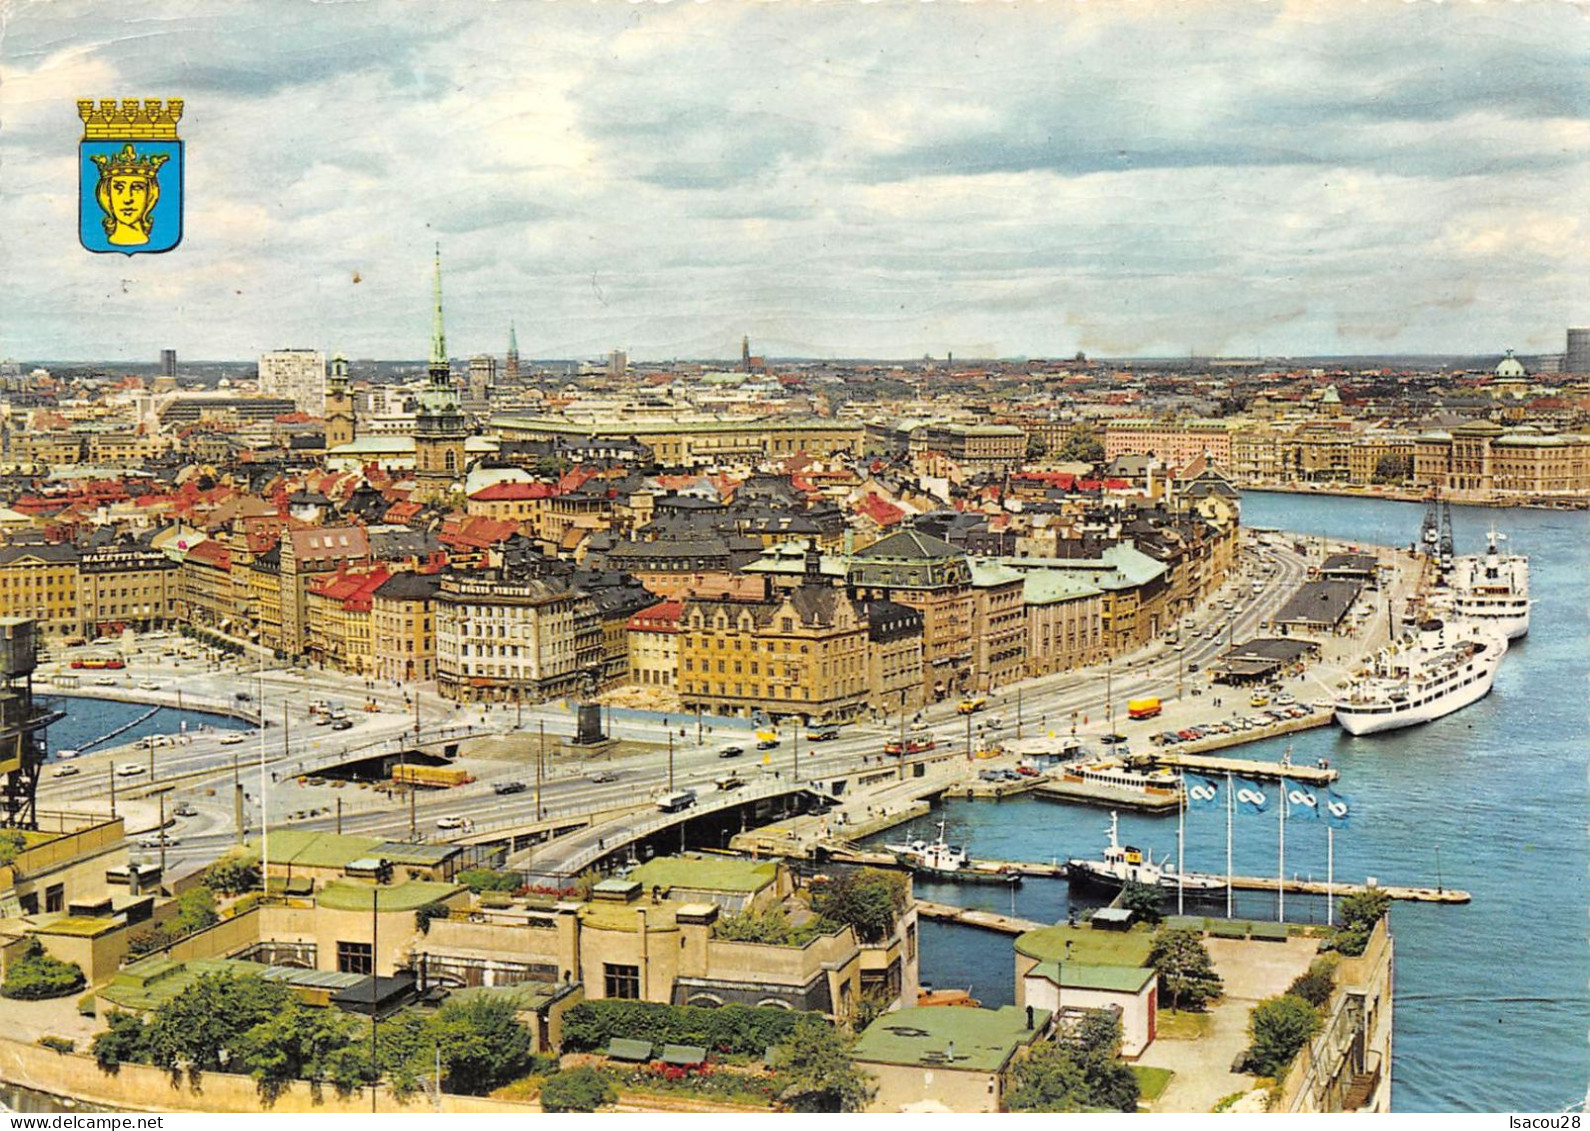 STOCKHOLM/ LE PORT / CARTE DE 1972 / VOIR SCAN - Schweden